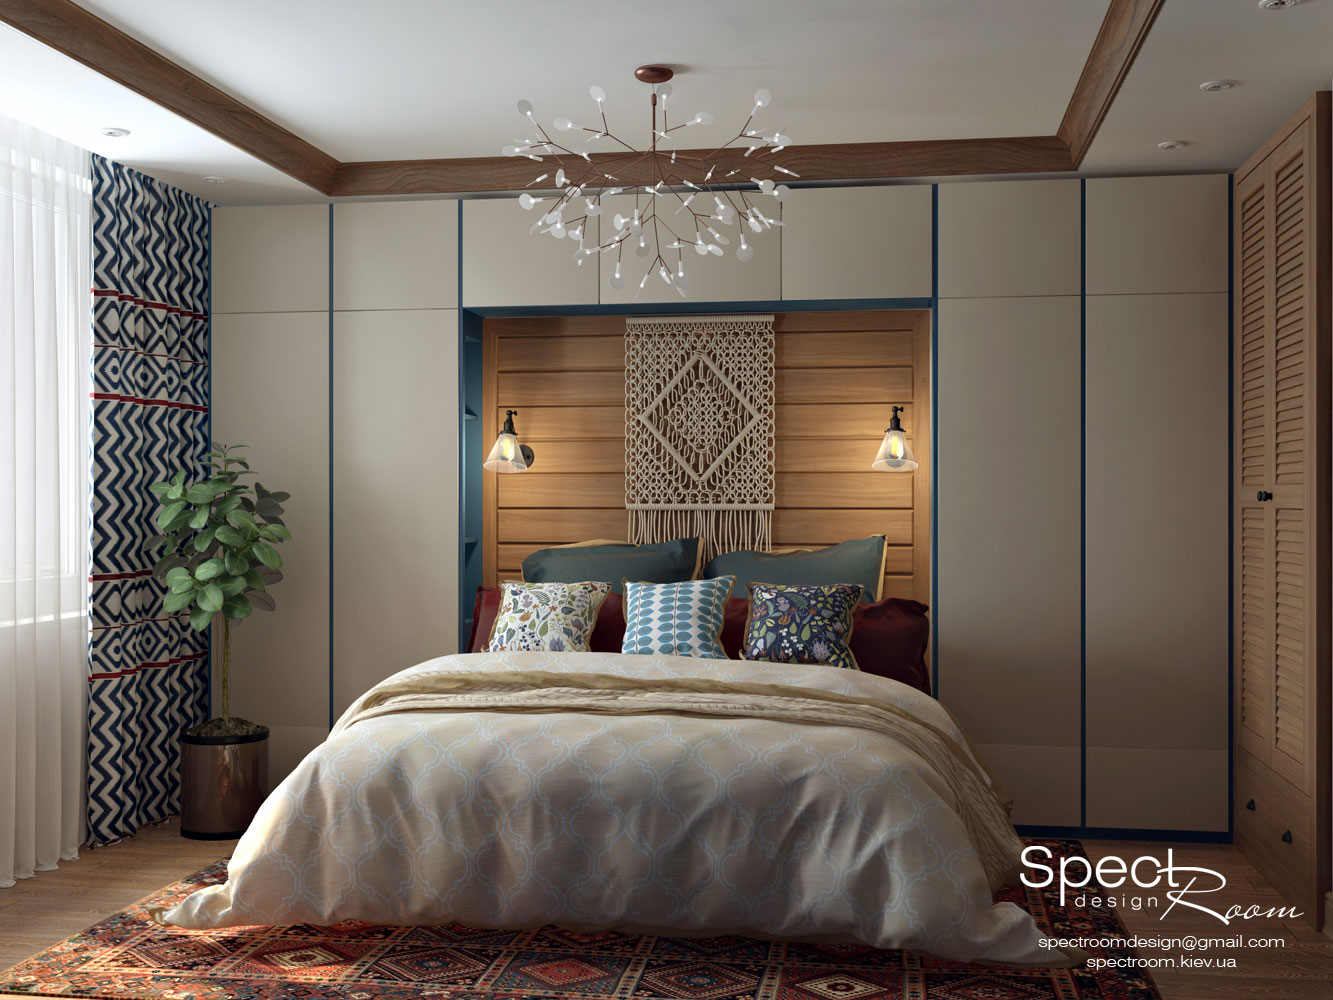 Дизайн квартири в середземноморському стилі  - Spectroom